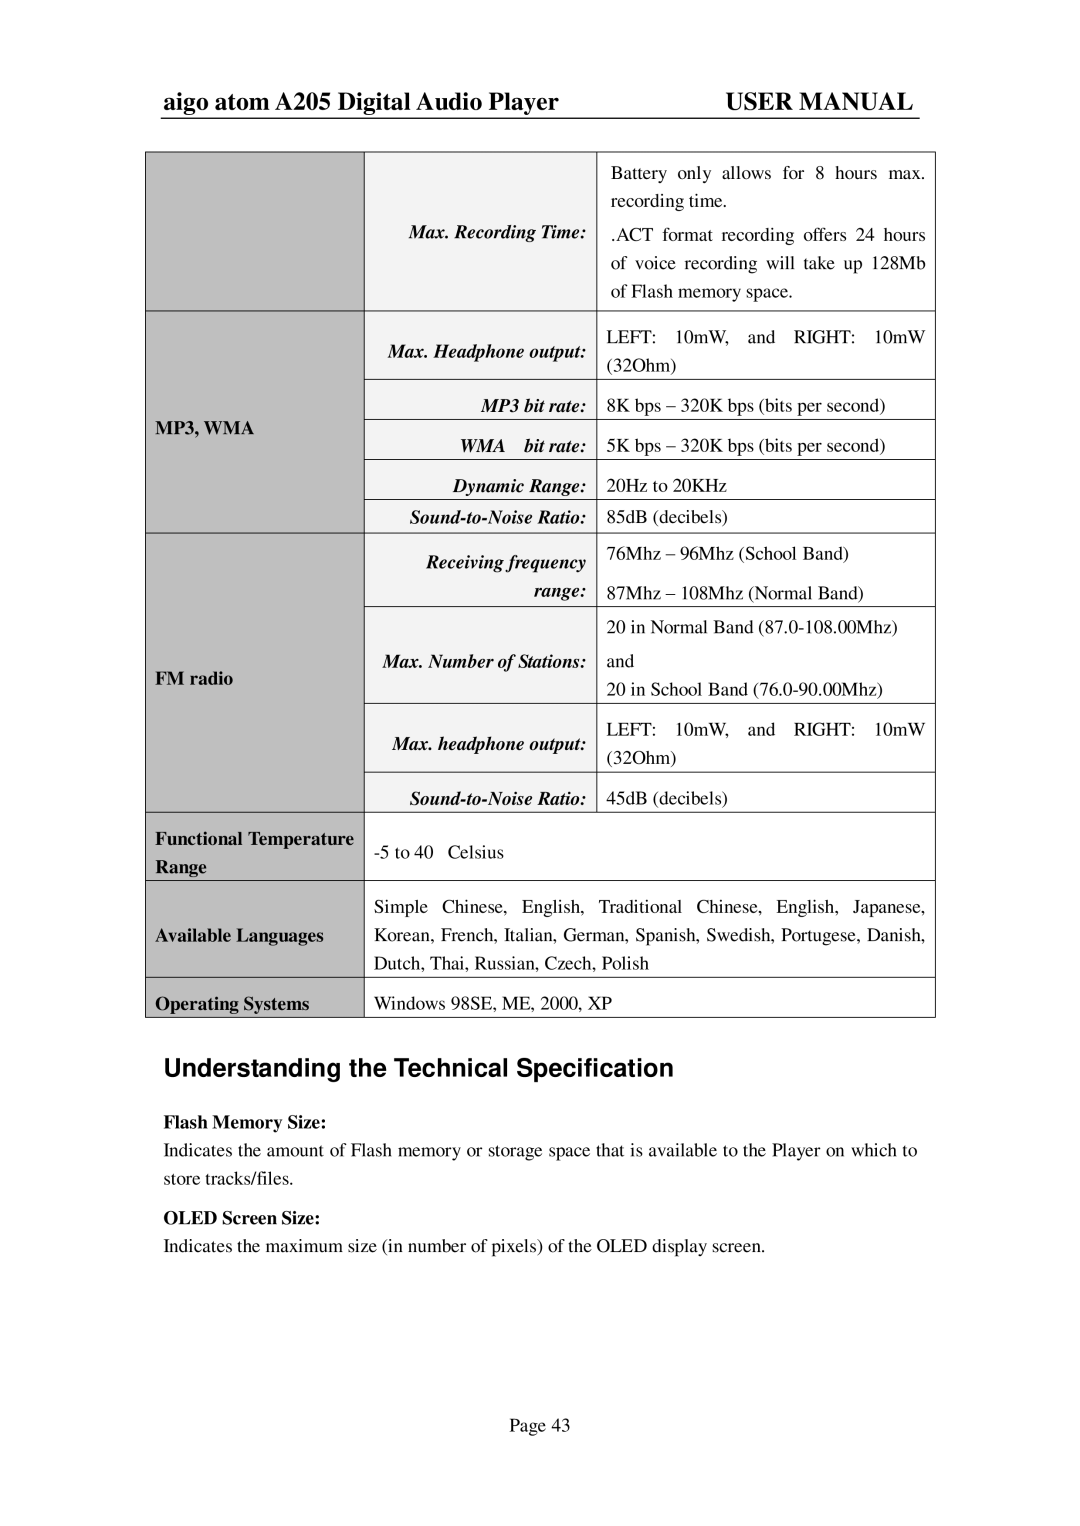 Aigo atom A205 user manual Understanding the Technical Specification 